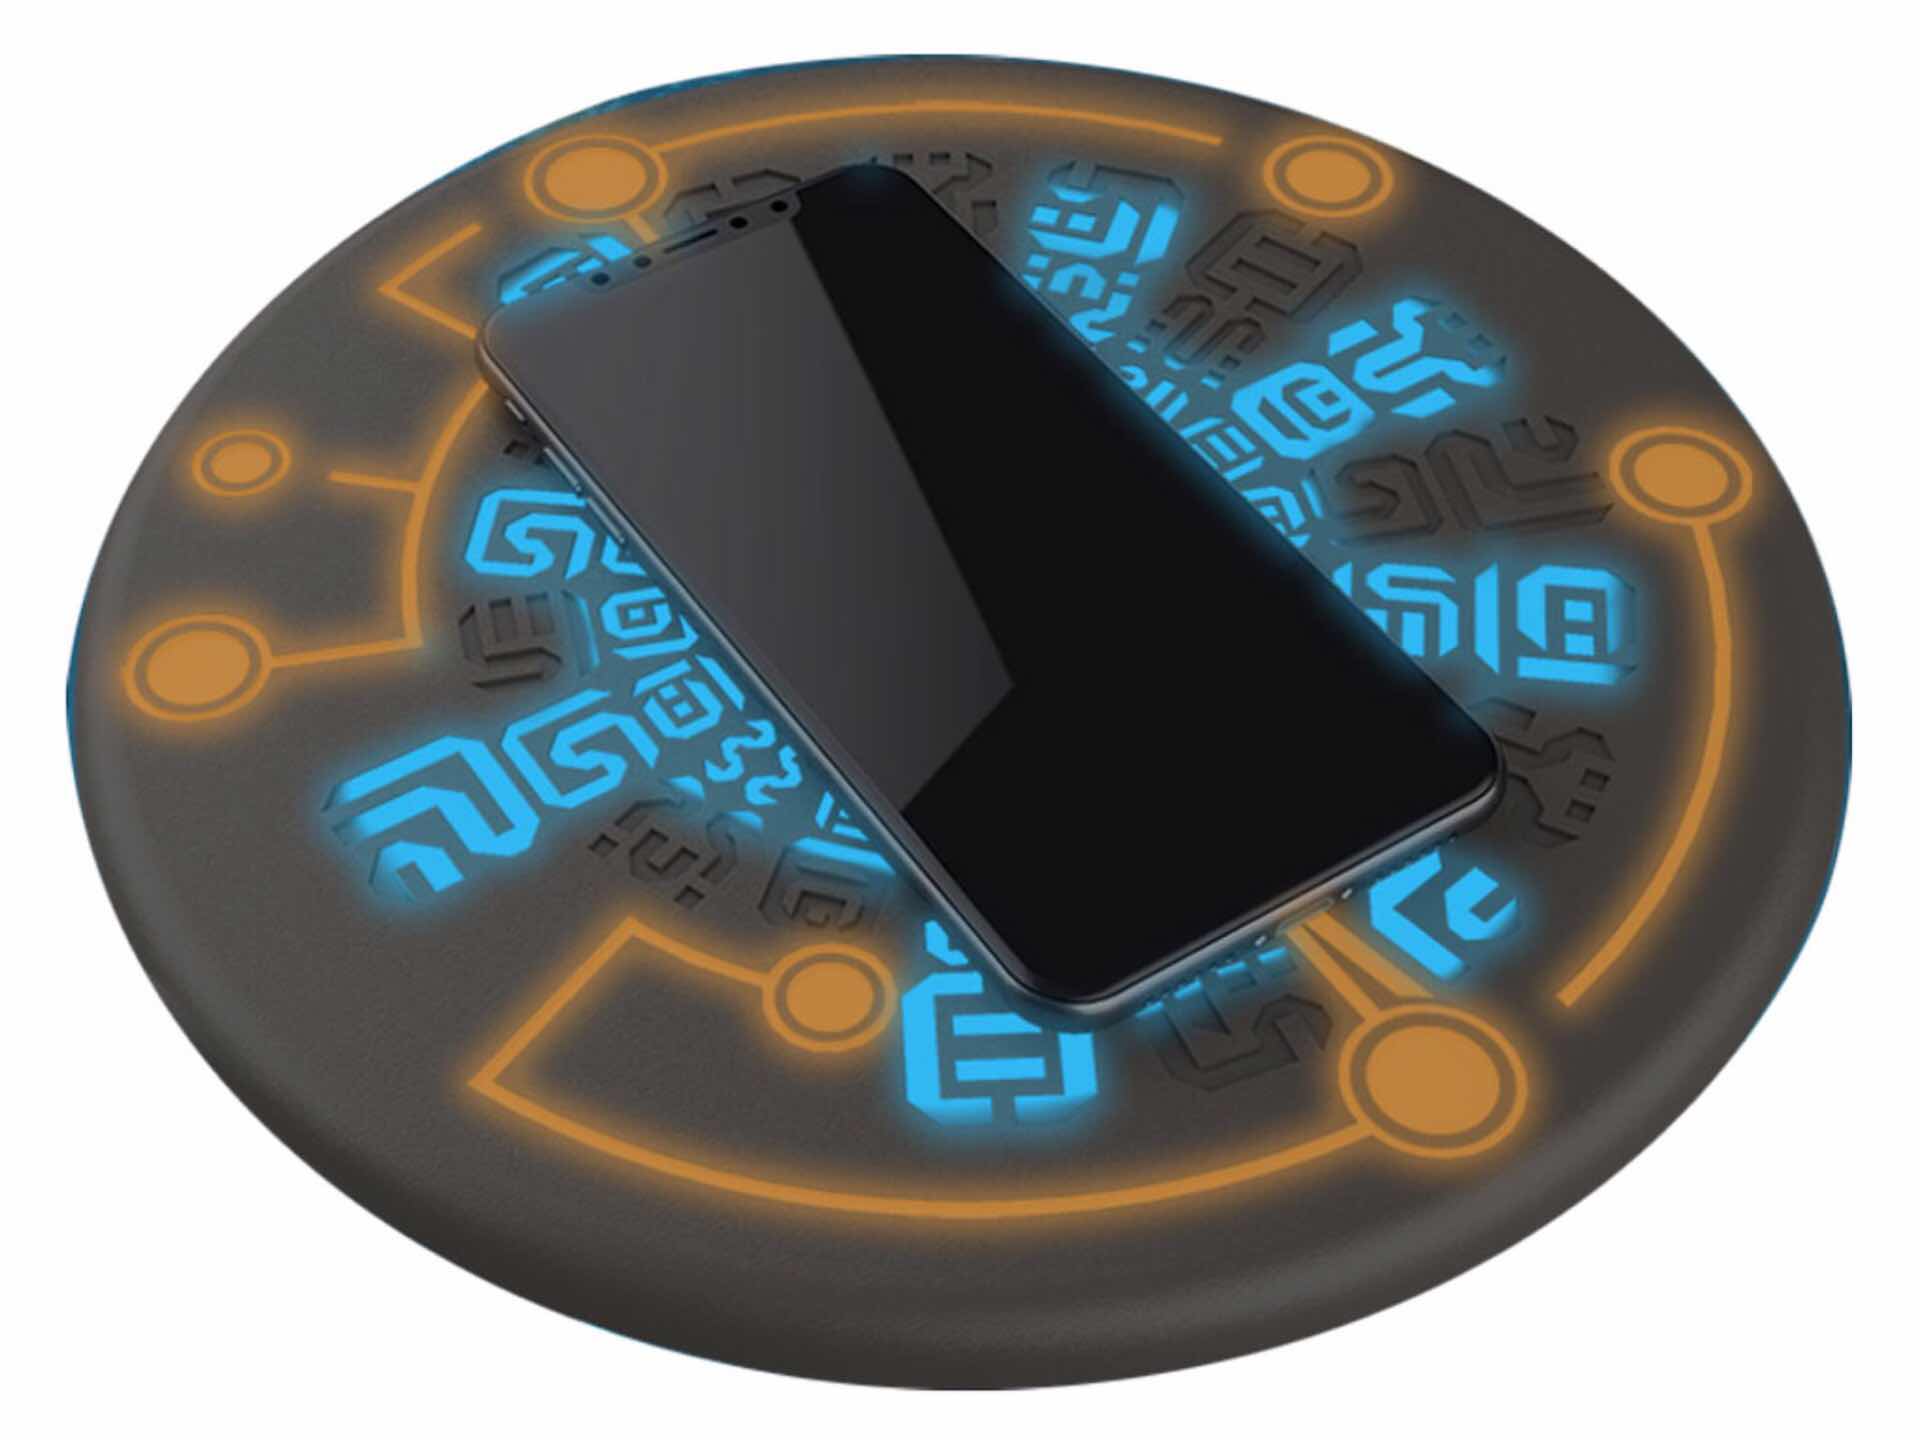 RegisBox “Sheikah Slate” Wireless Charging Pad